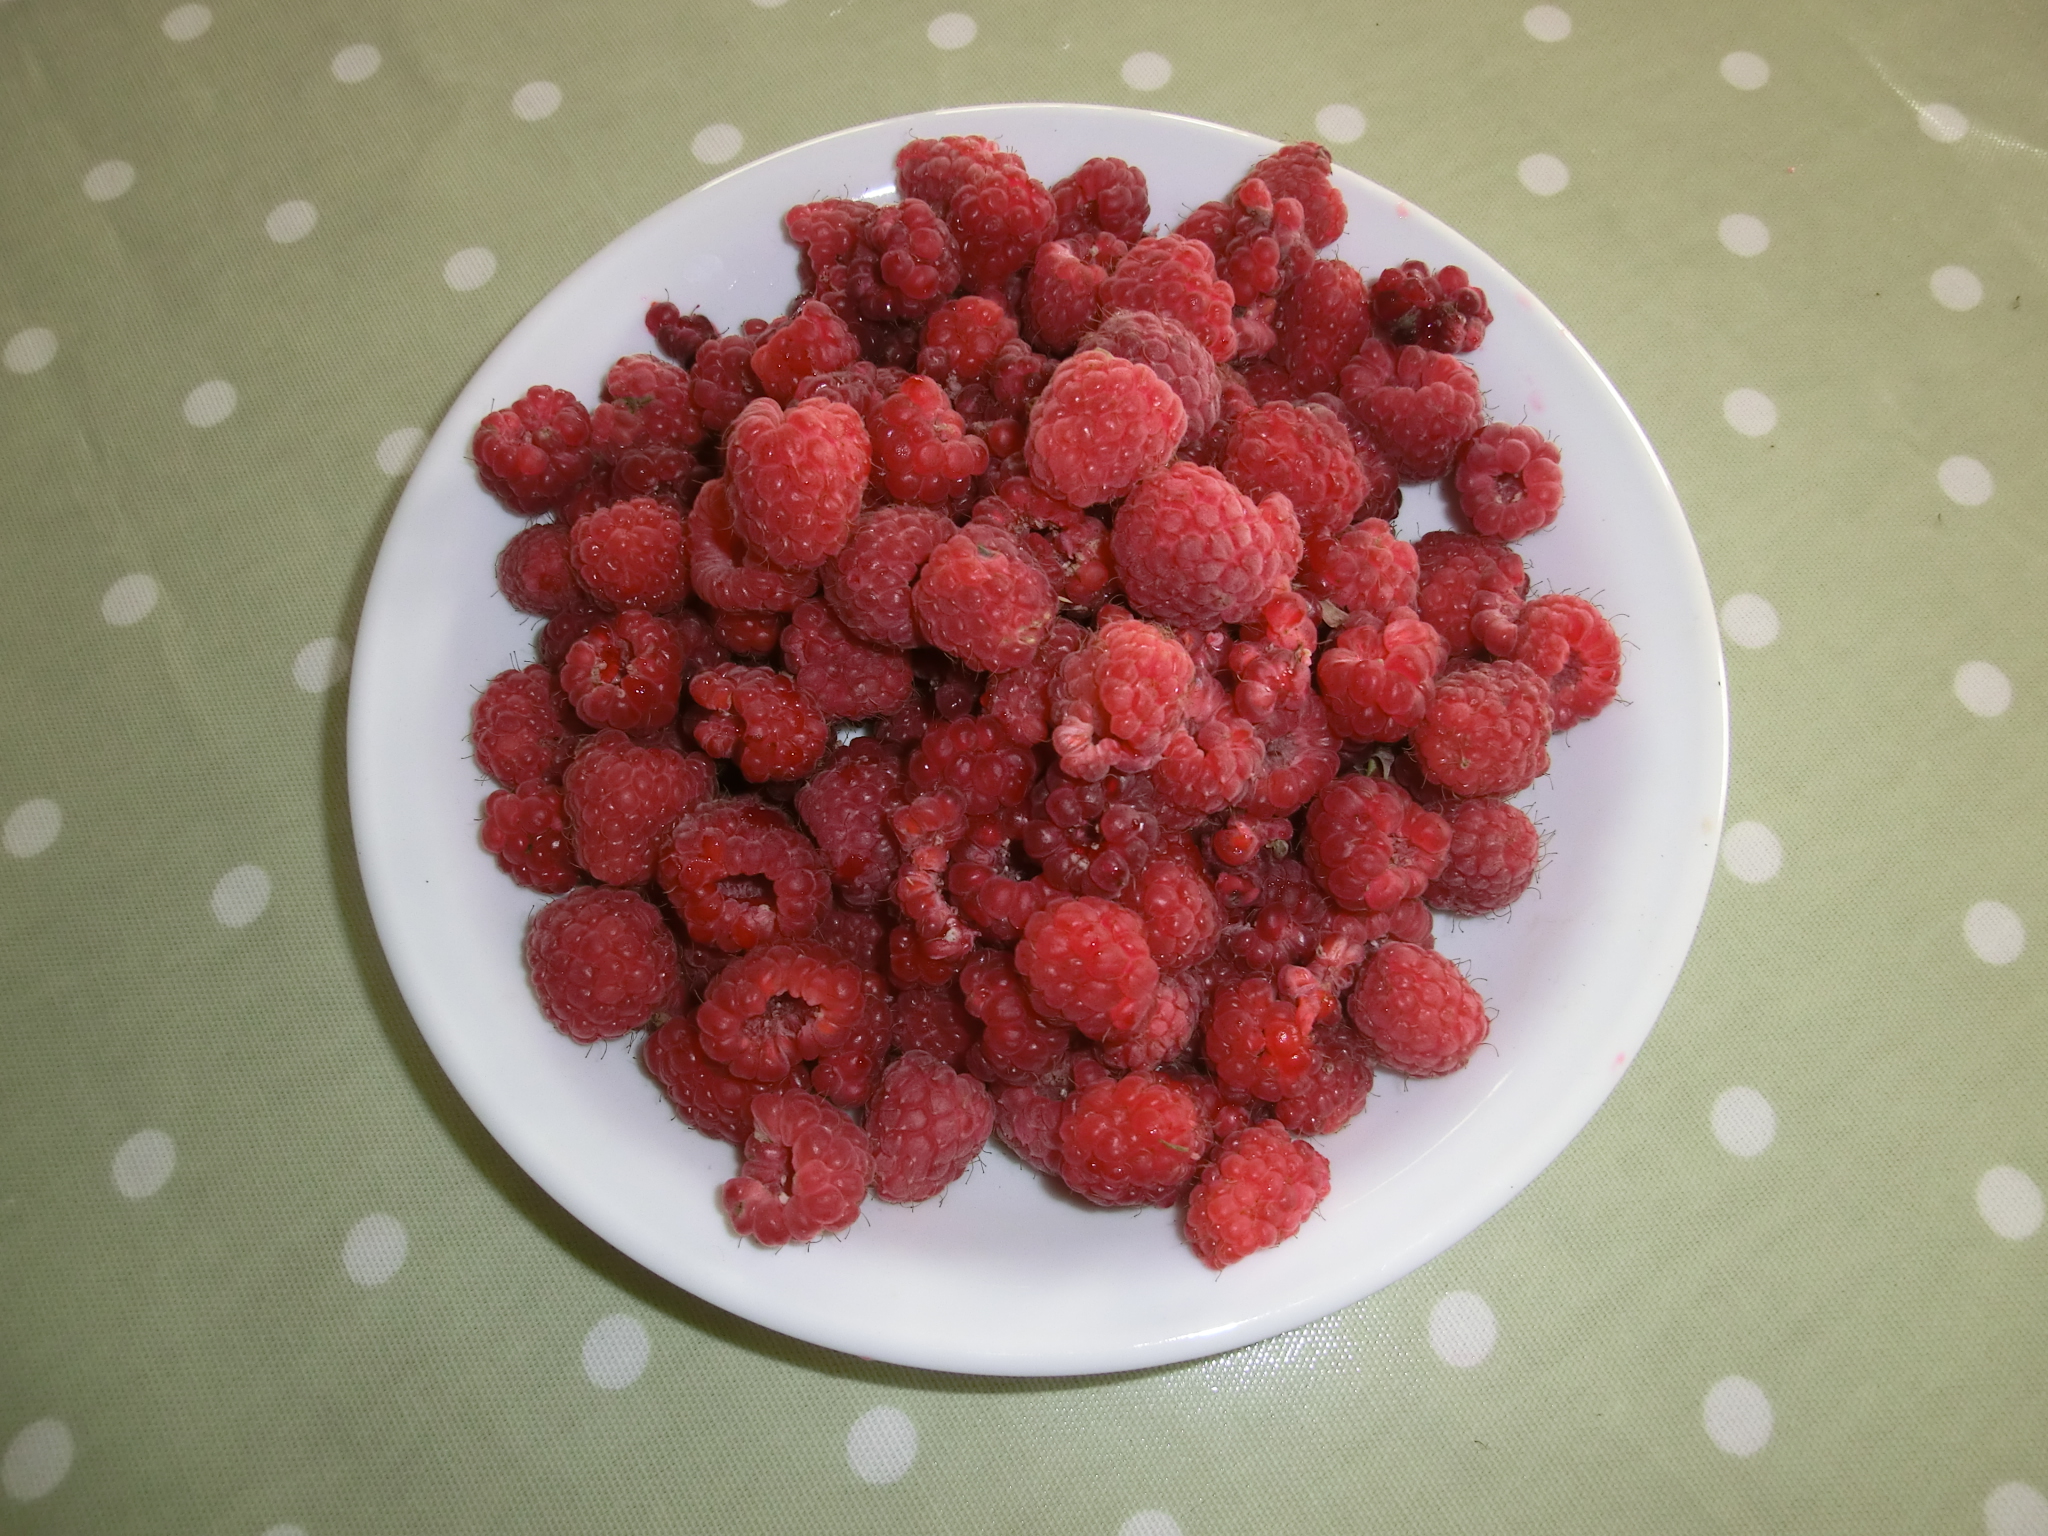 Raspberries rule from summer to winter!